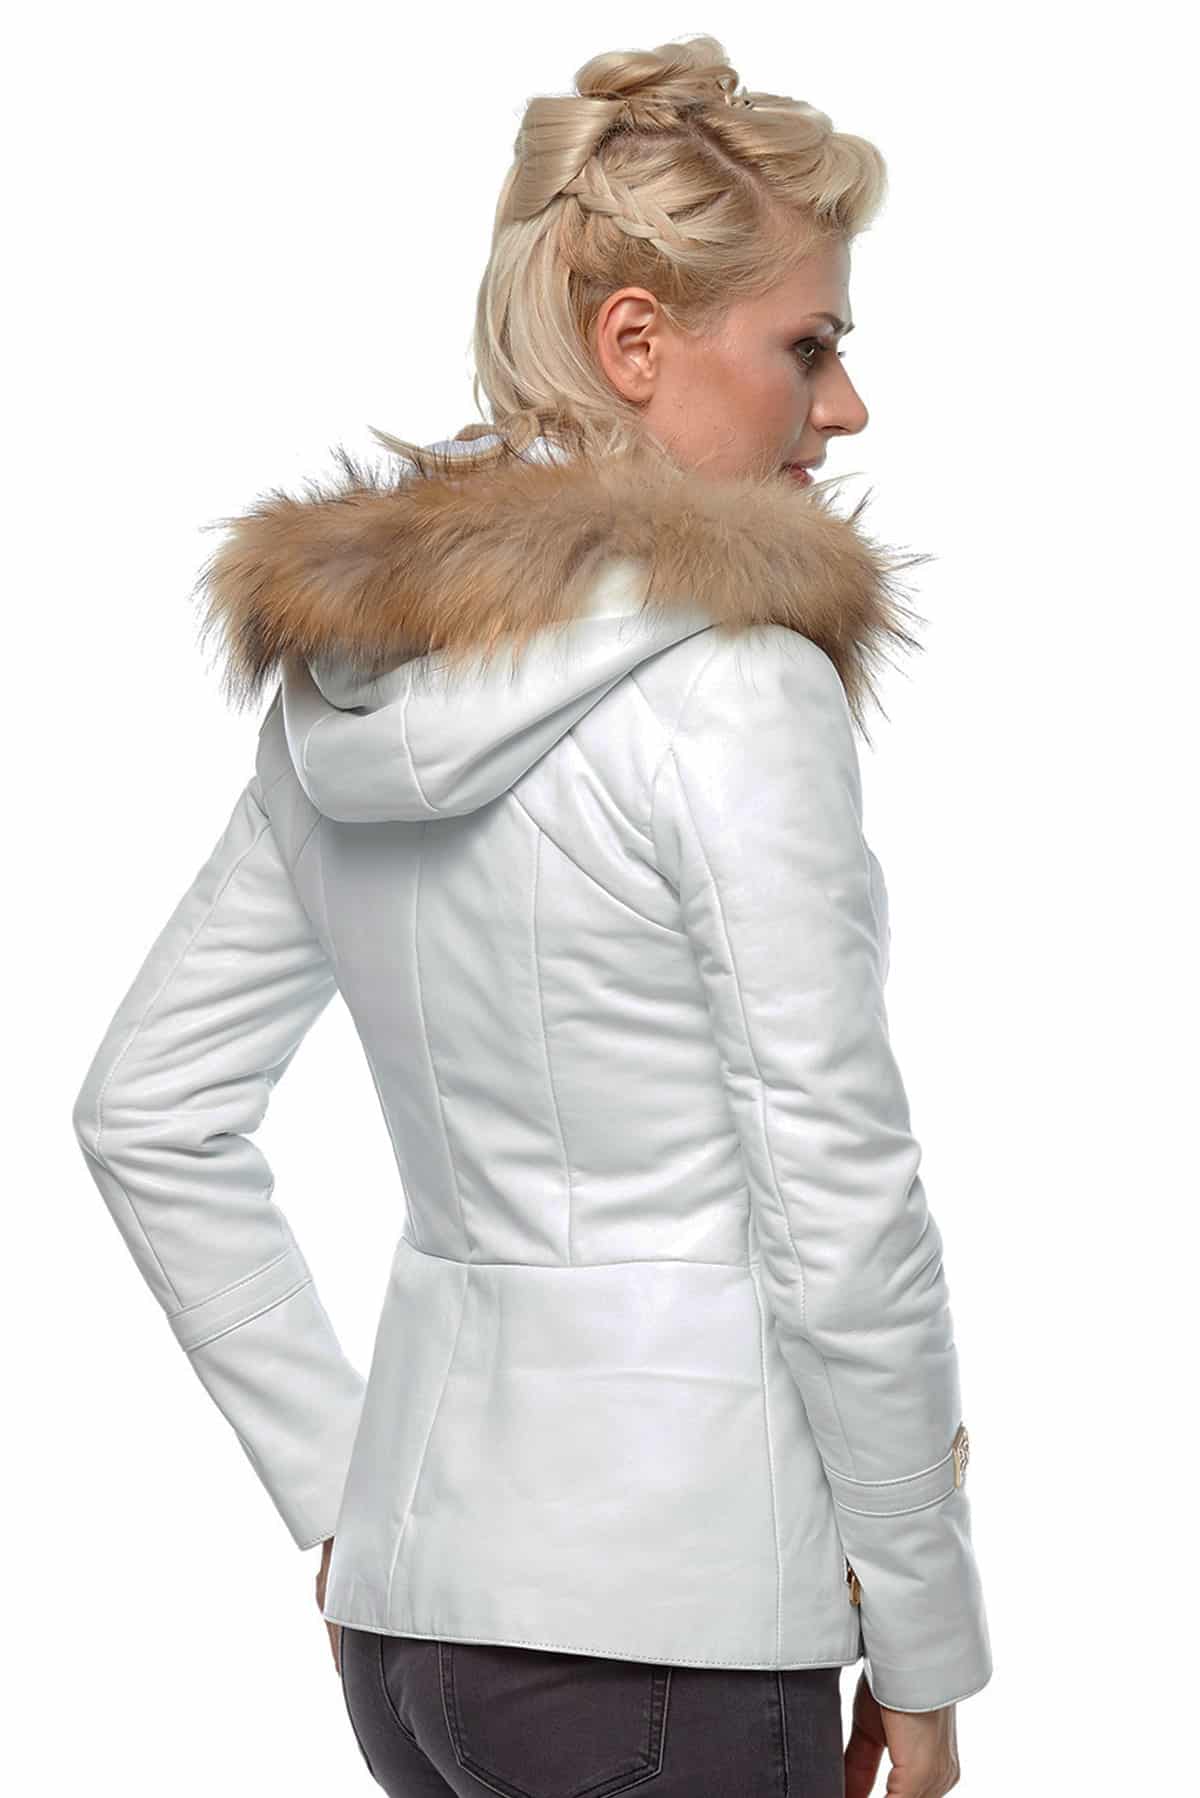 Royal Classic White Hooded Leather Coat | Urban Fashion Studio